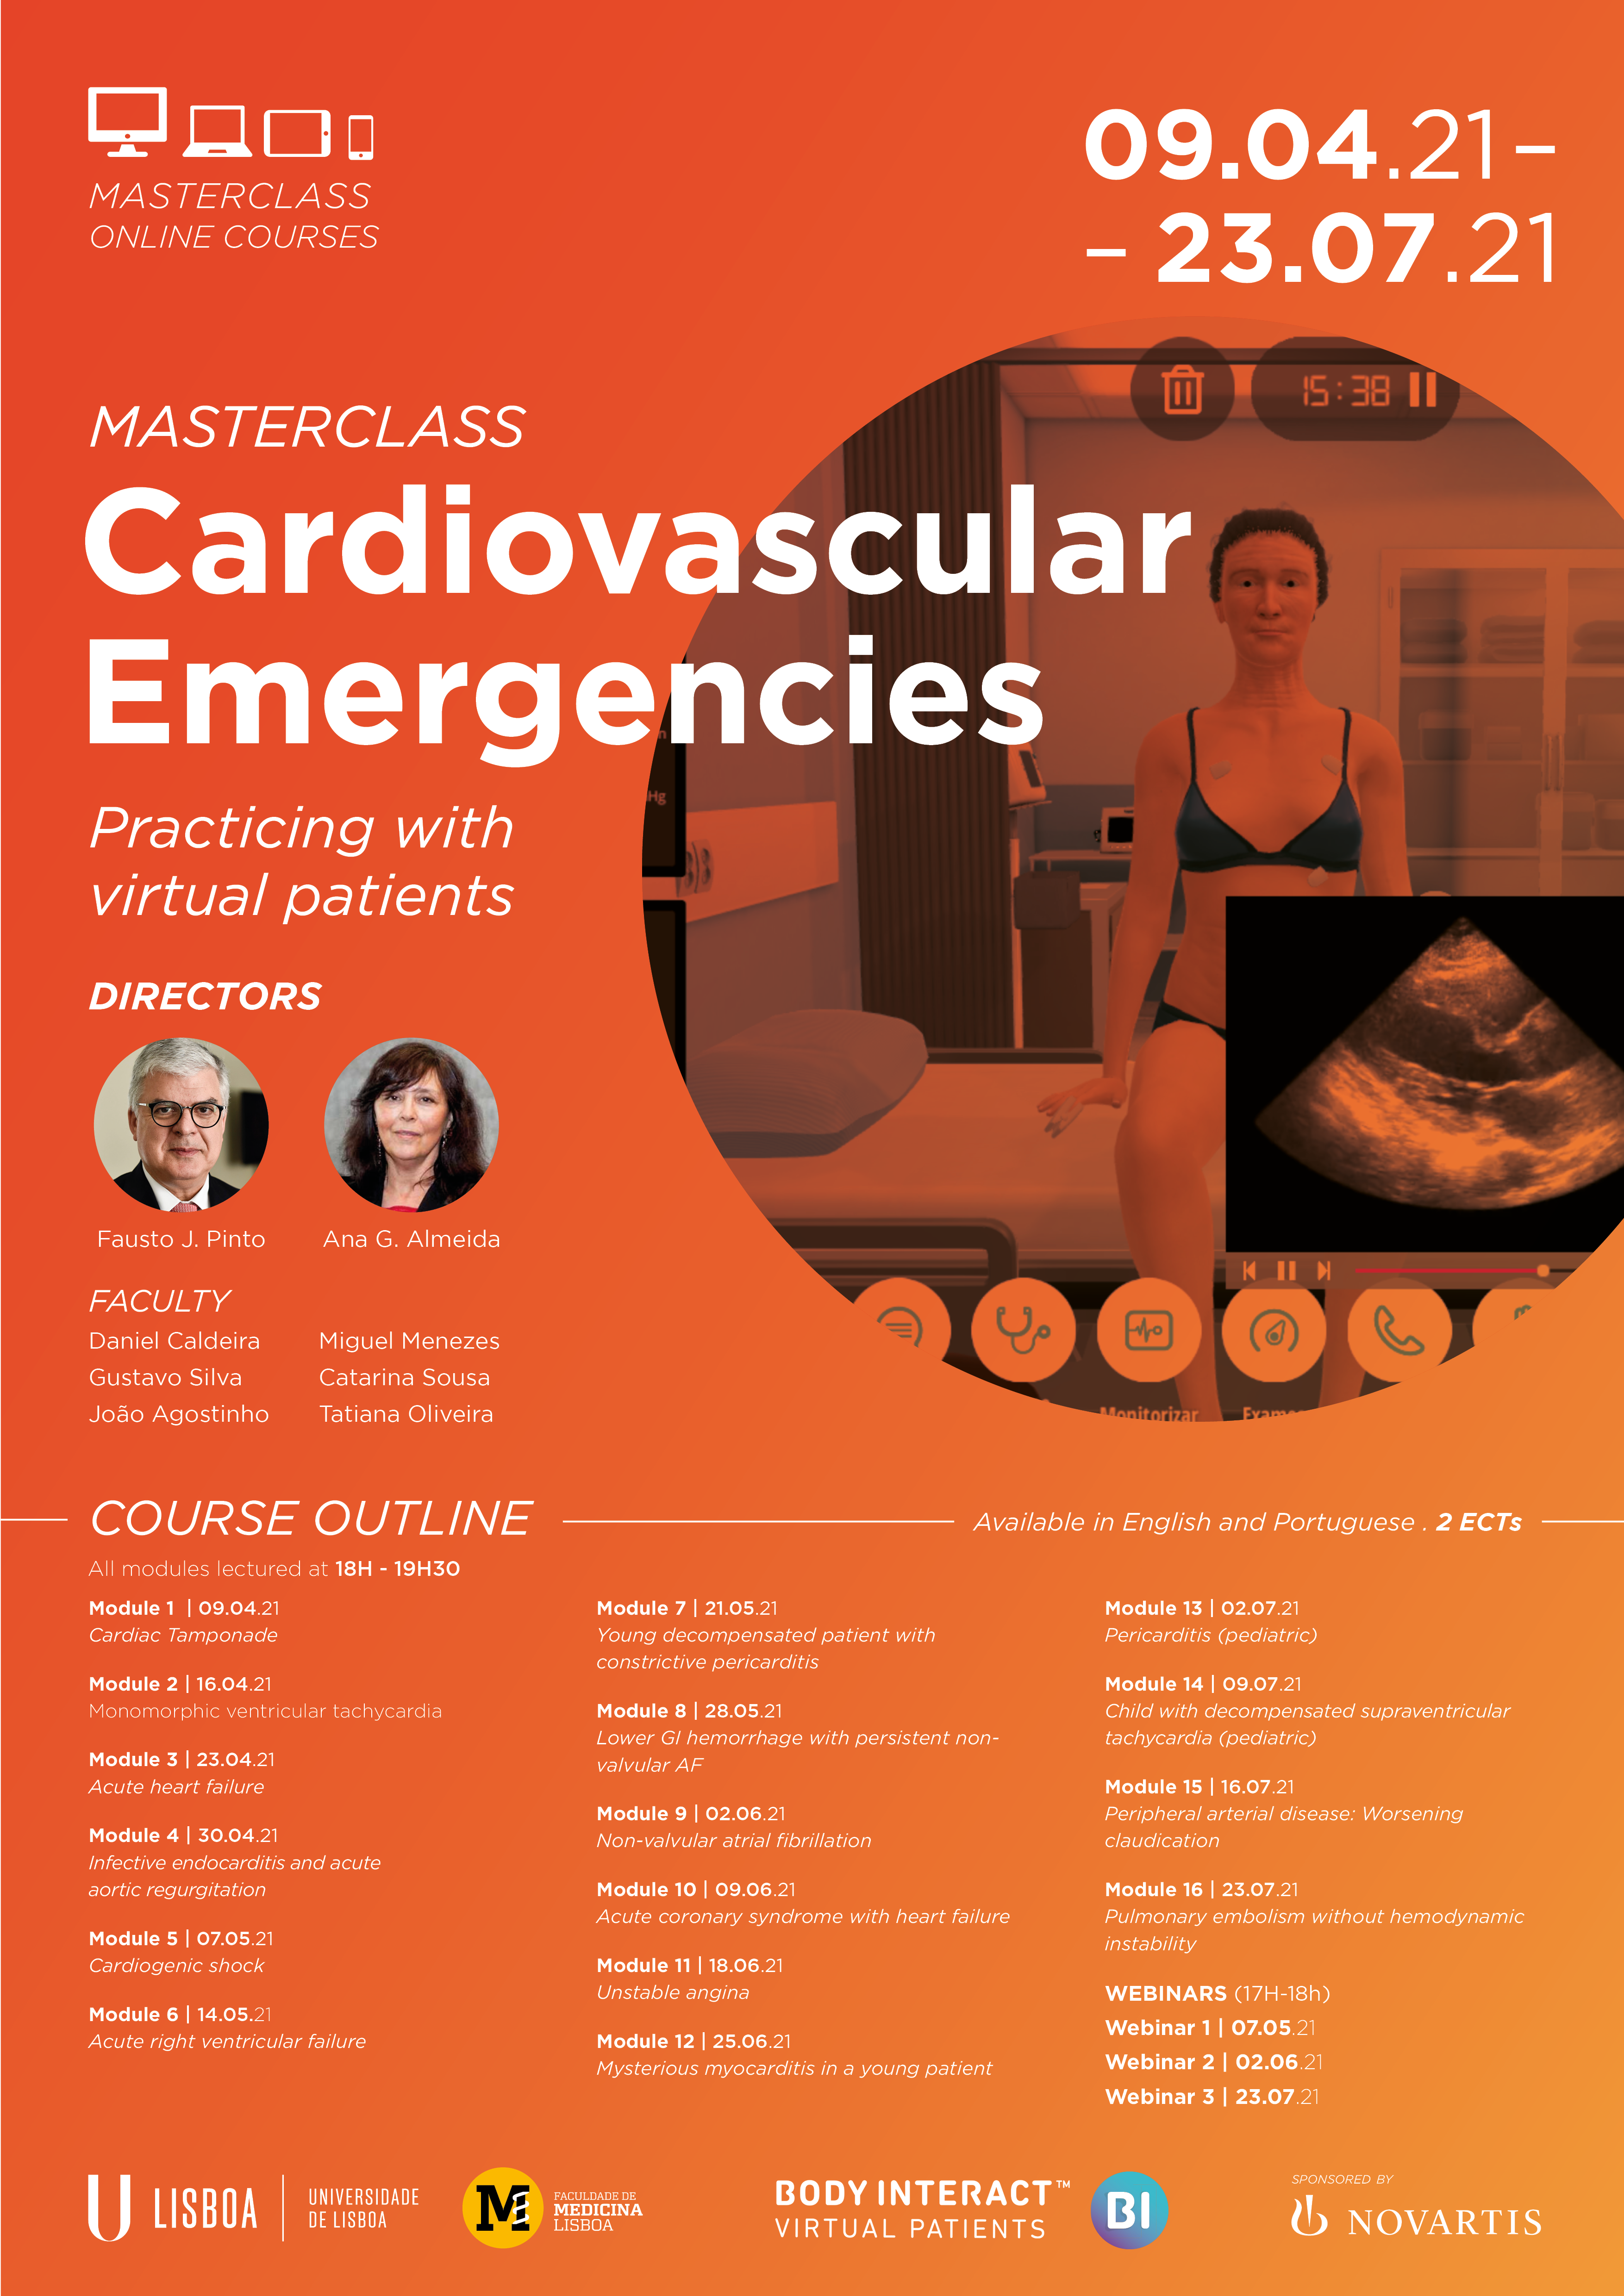 Body Interact Cardiovascular Emergencies posts